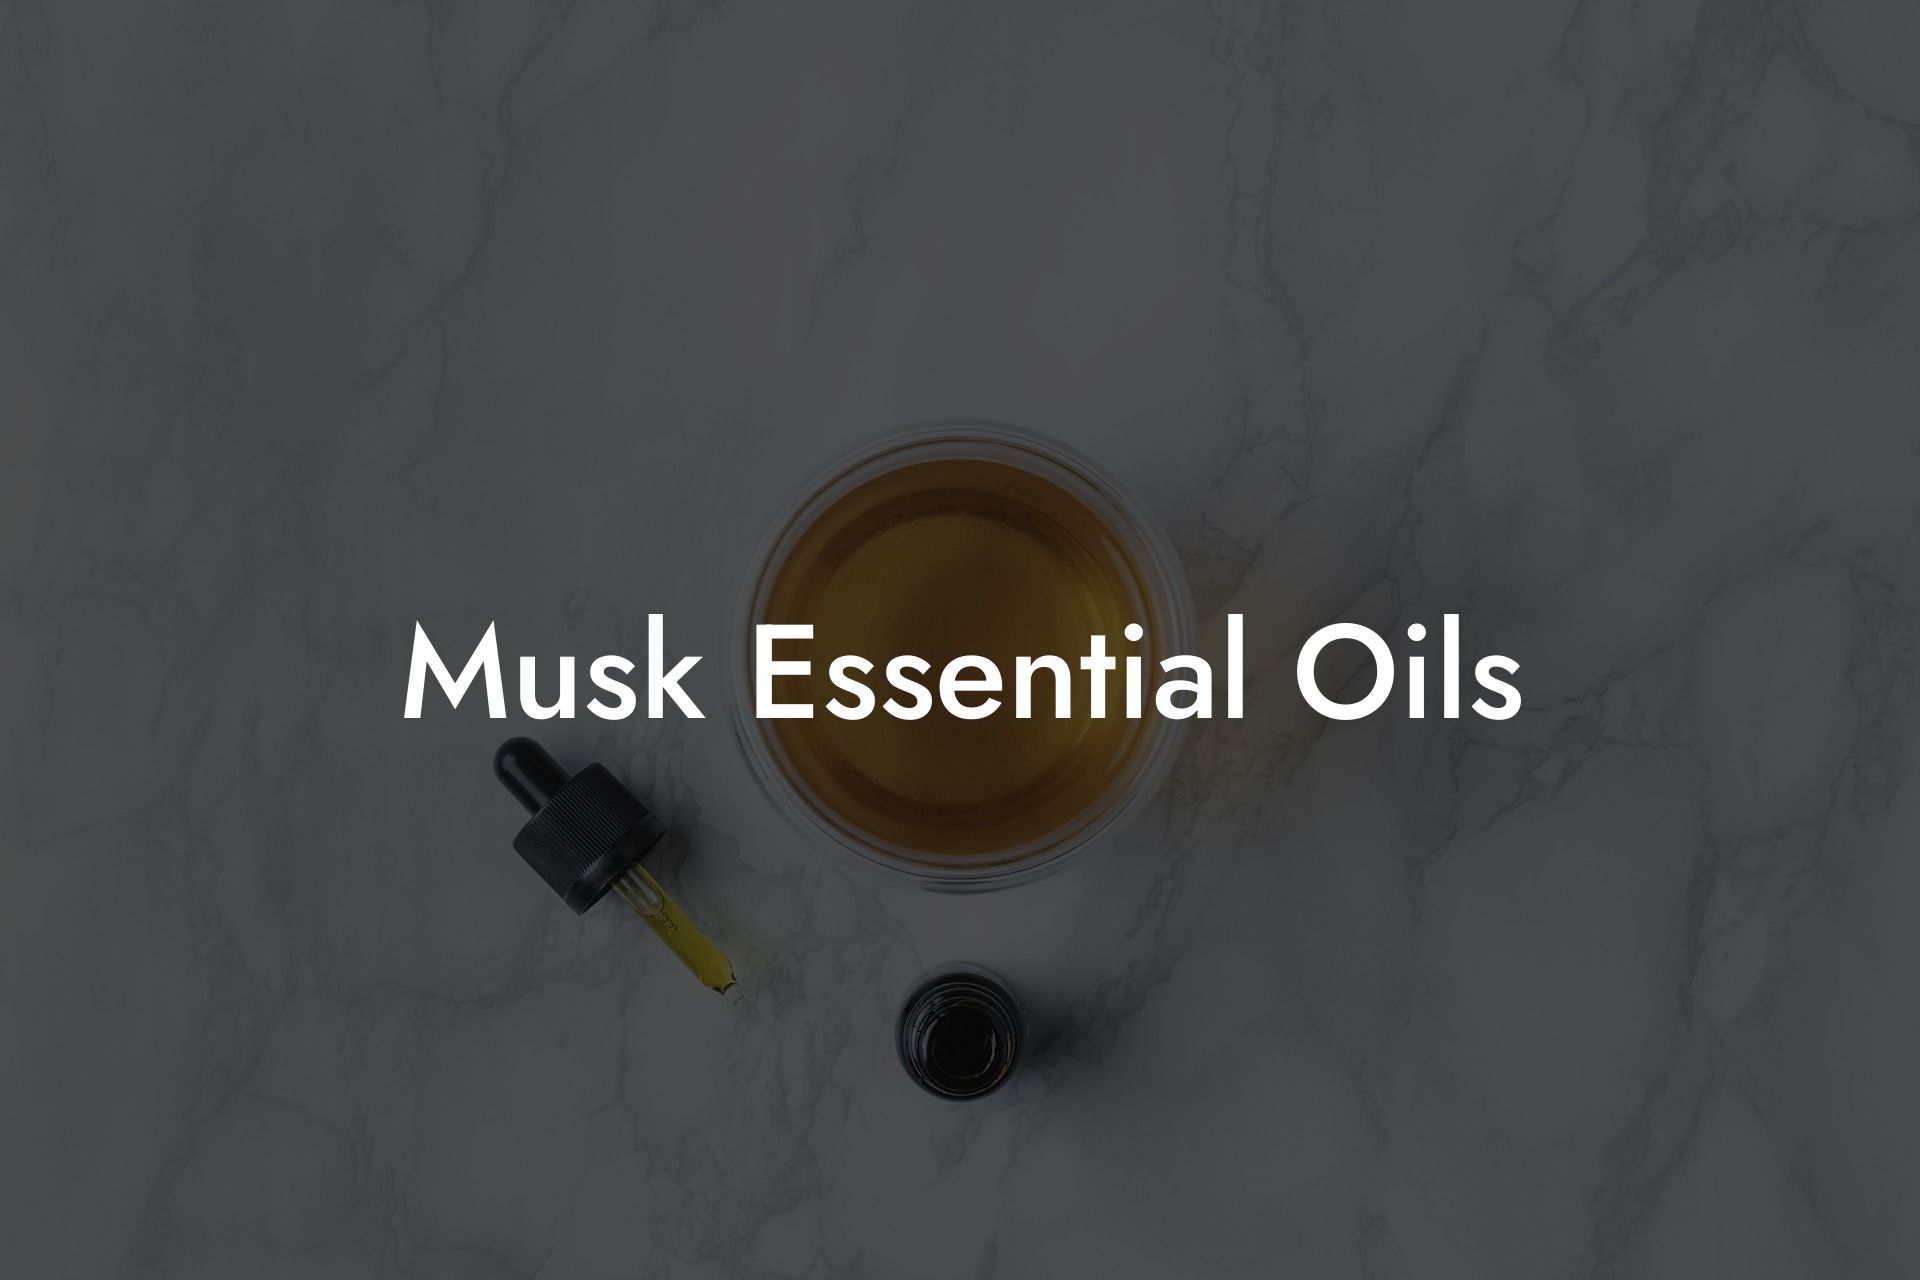 Musk Essential Oils